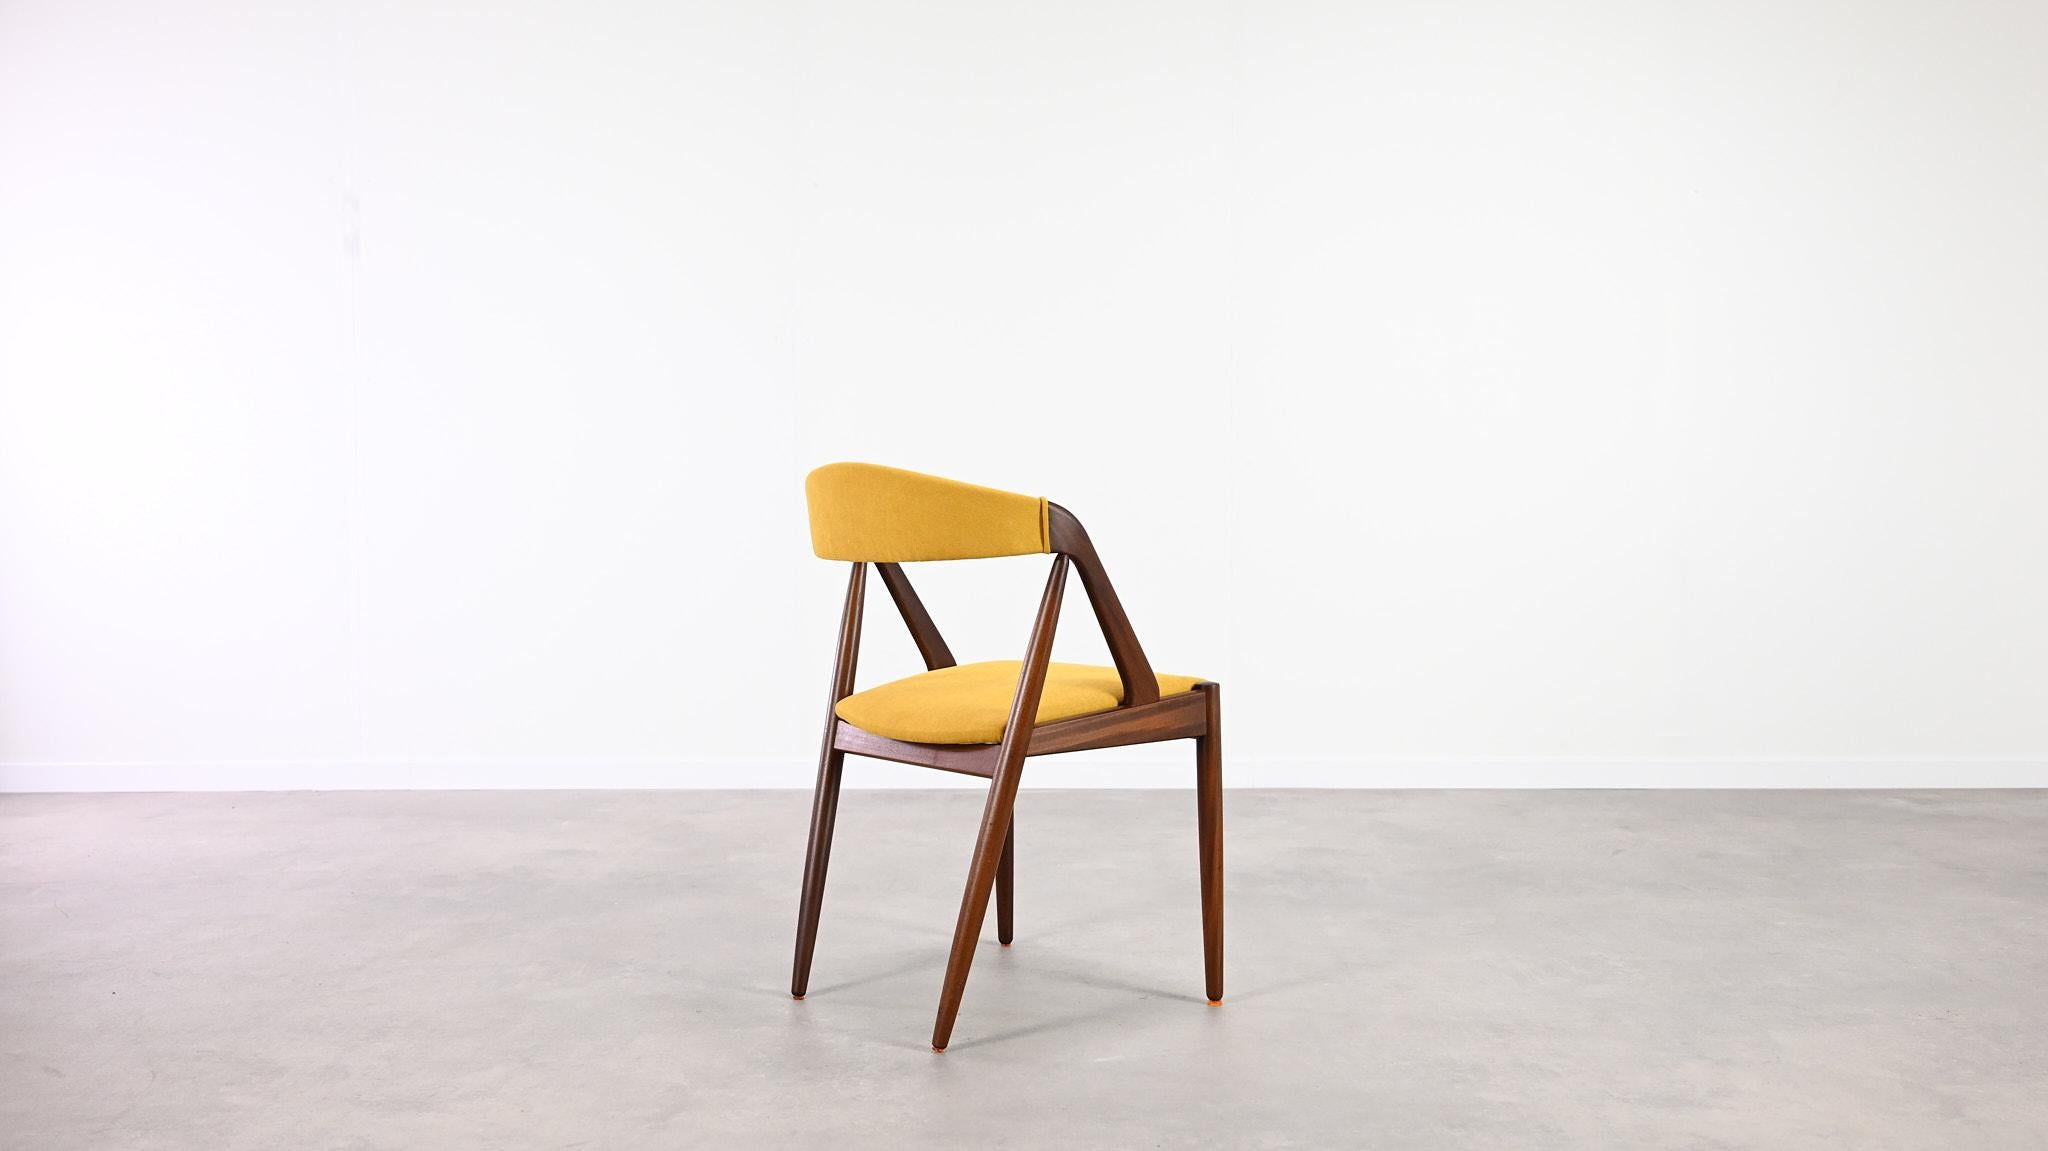 Varnished Kai Kristiansen, set of 8 chairs model 31